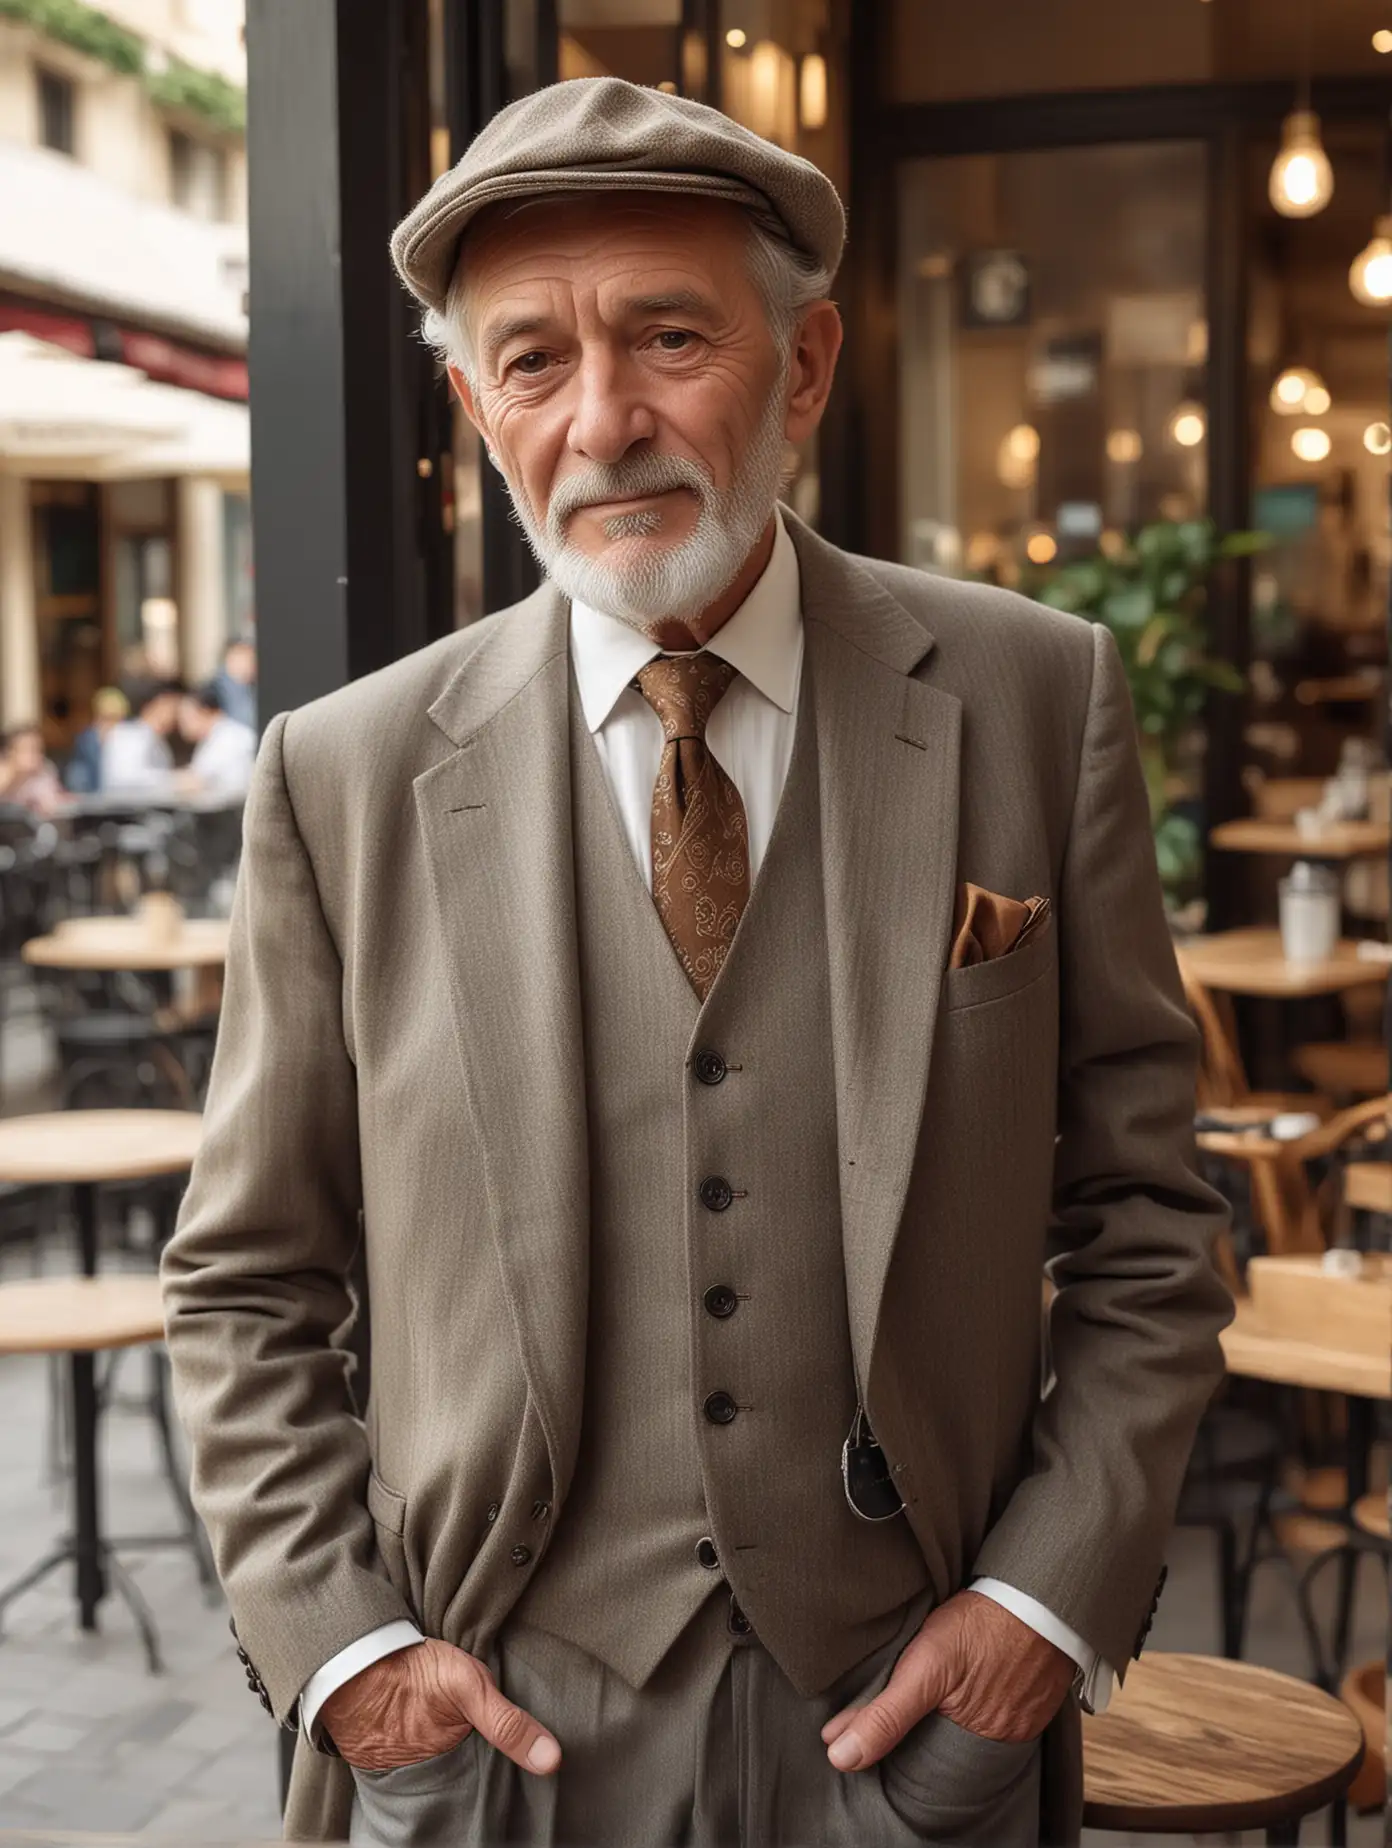 Luxuriously Dressed Noble Middleaged Man in Elegant Cafe Setting